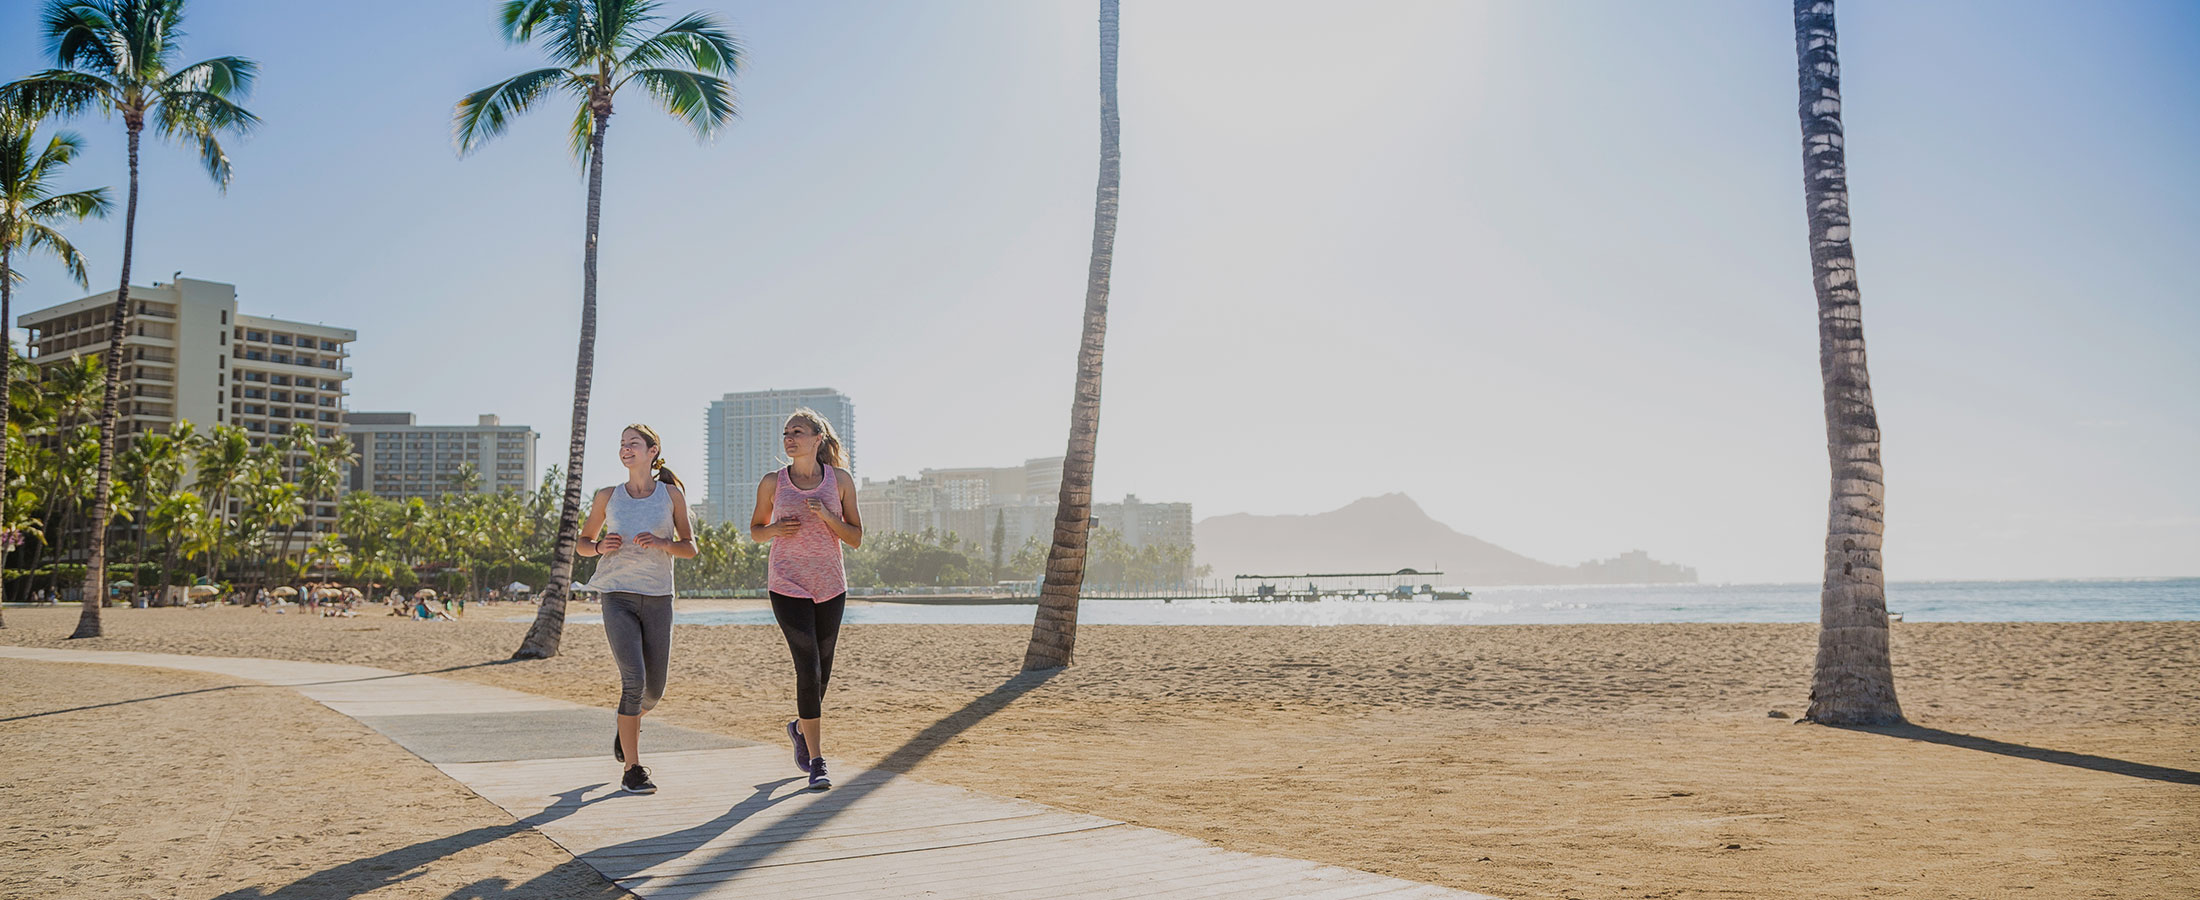 image of people exercising on Hawaii beach